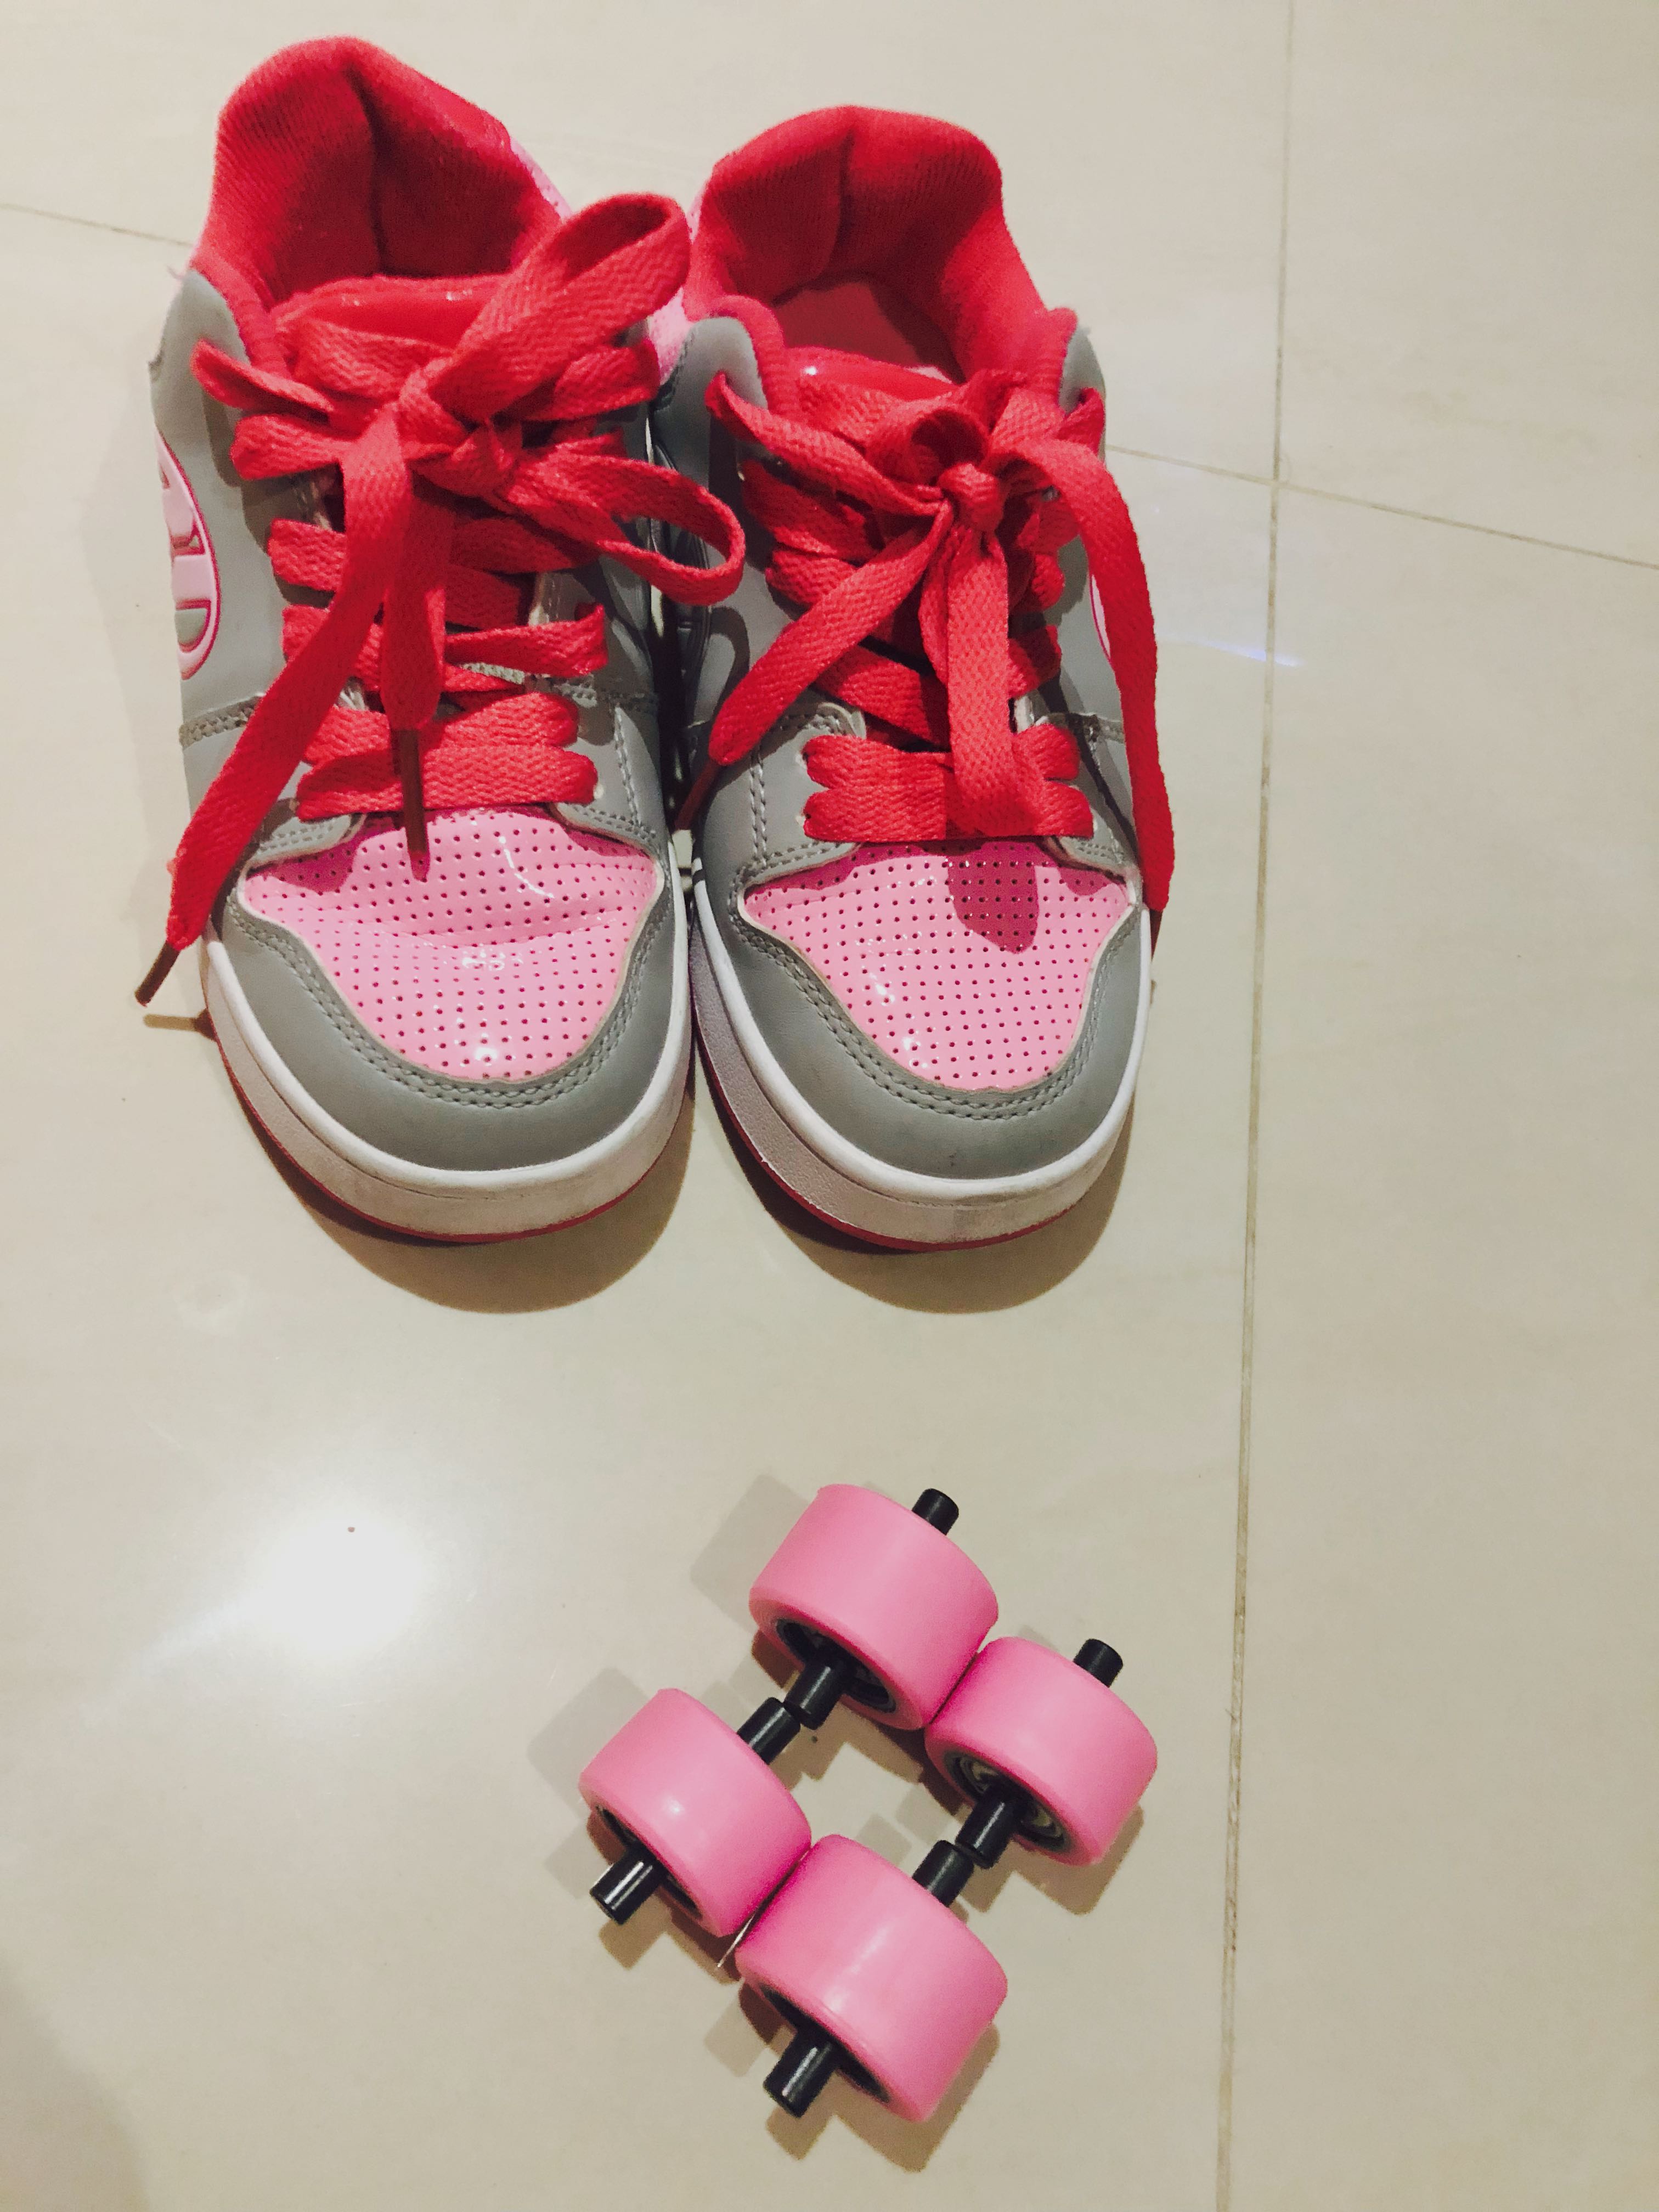 pink heelys size 13